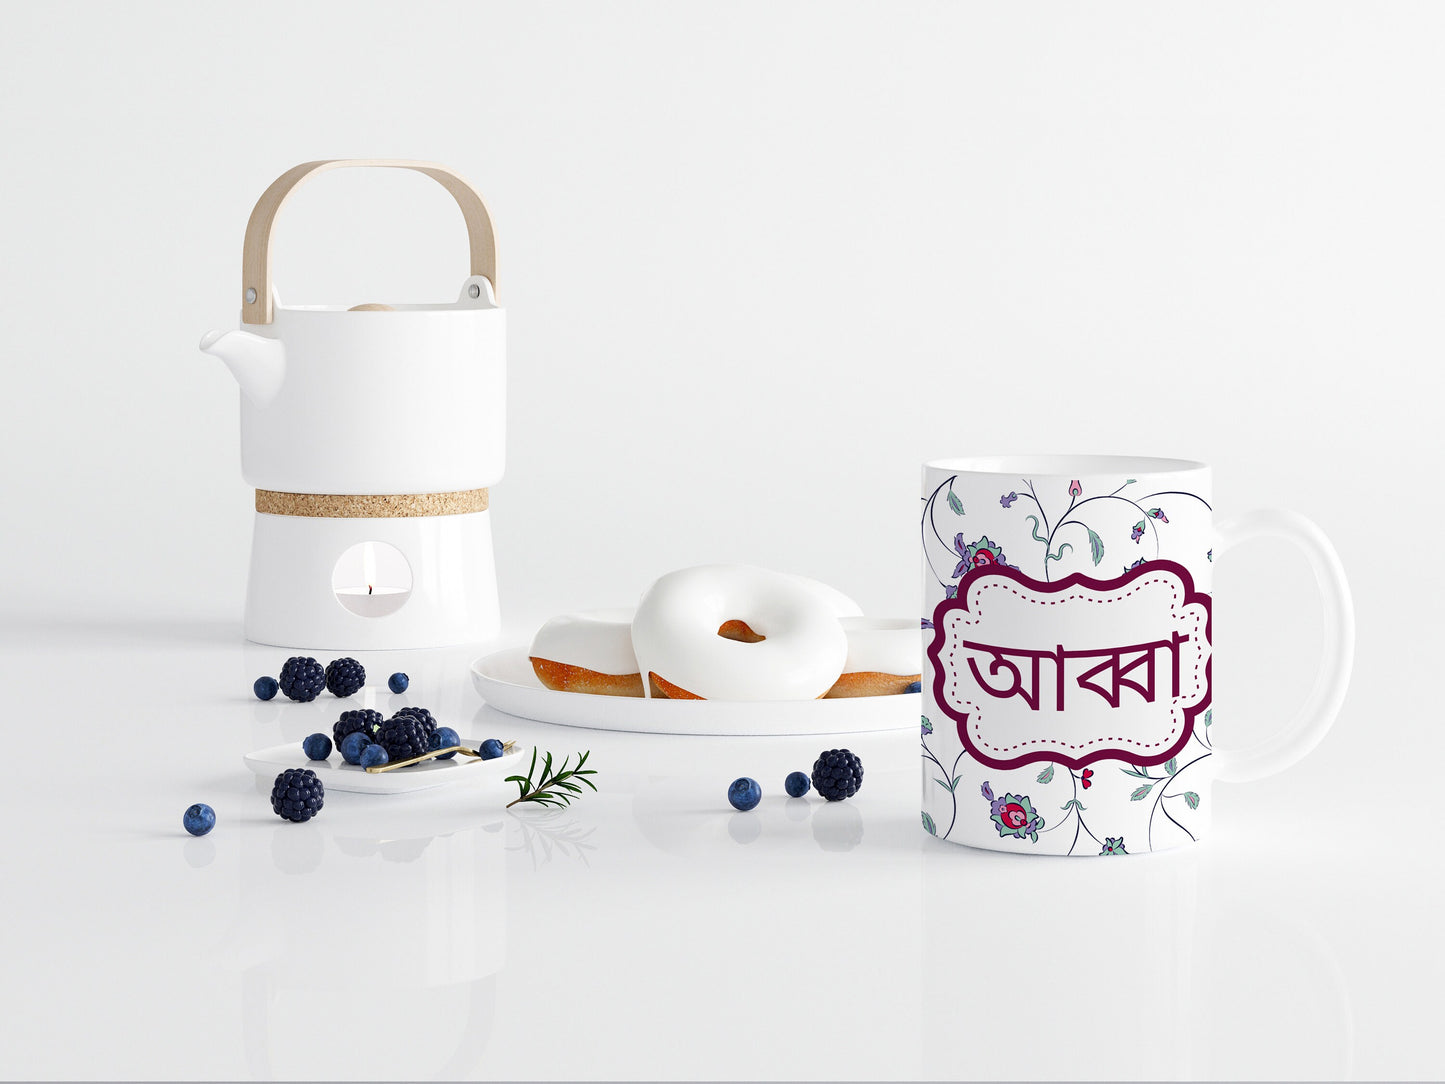 Amma or Abba bangla mugs, perfect Eid mugs, Mothers day gift for mum or anniversary gift for parents. Individual Bangla mug or set of bangla